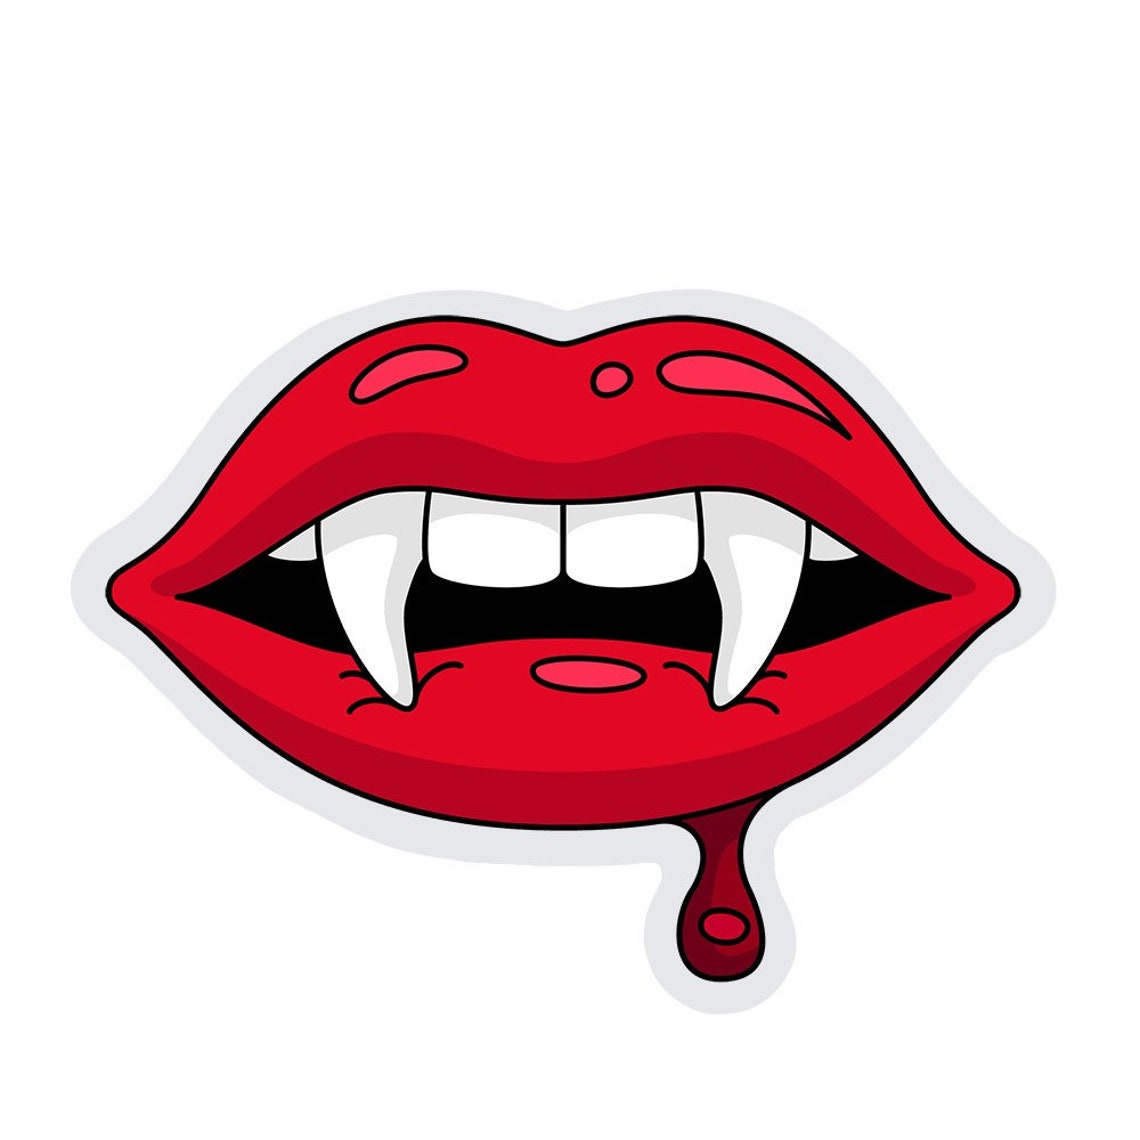 Vampire lips sticker vinyl blood red twilight teeth | Etsy